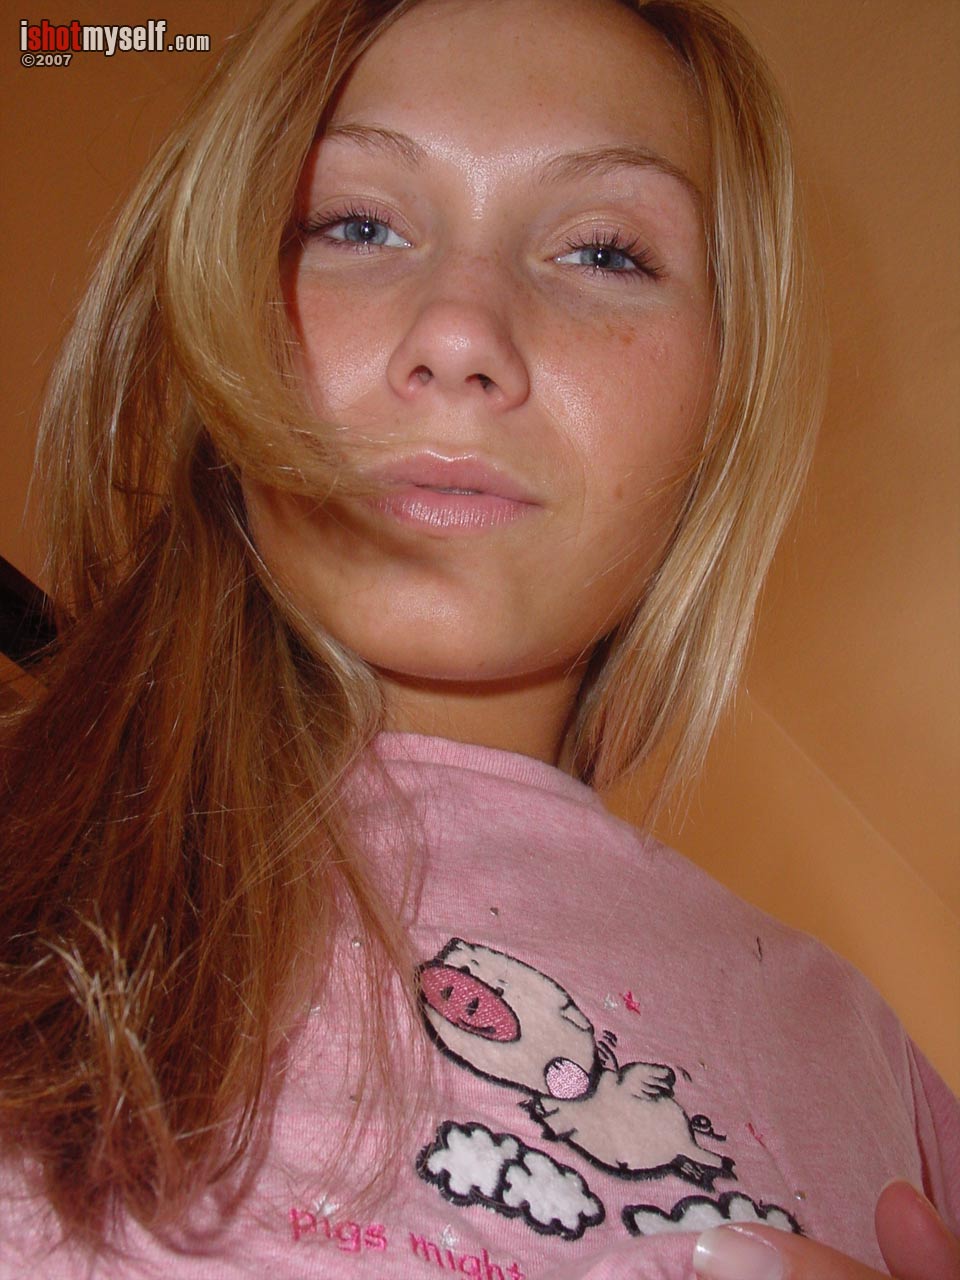 fiala-nude-blonde-taned-pussy-selfie-ishotmyself-03